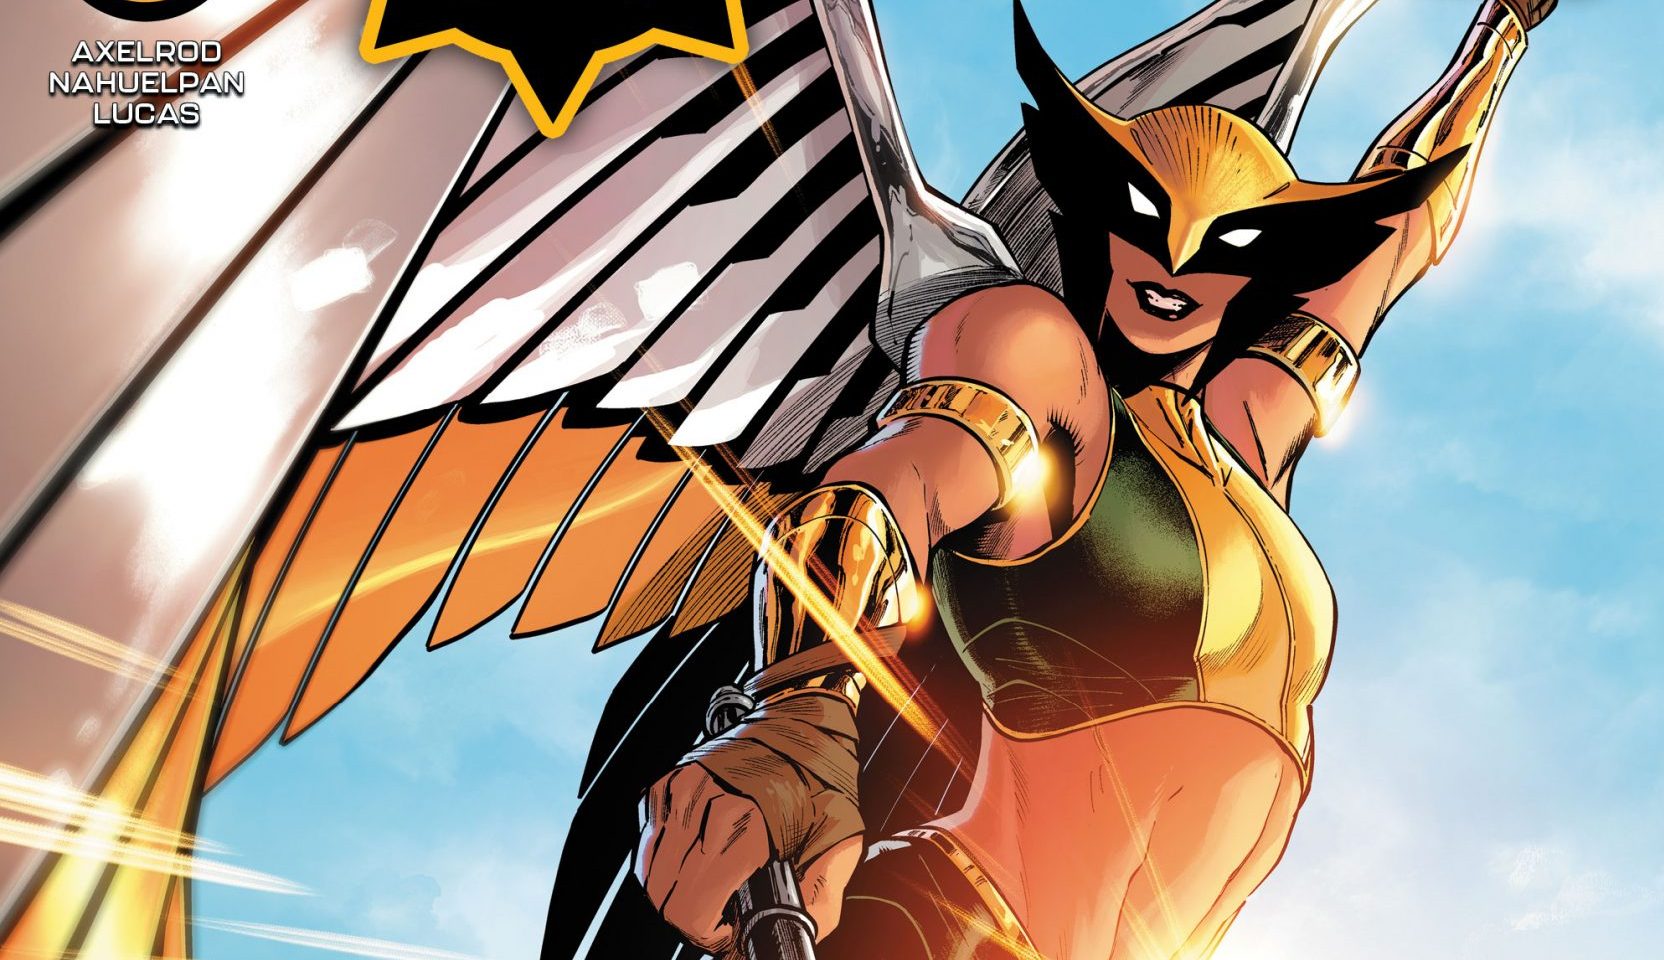 Hawkgirl #1